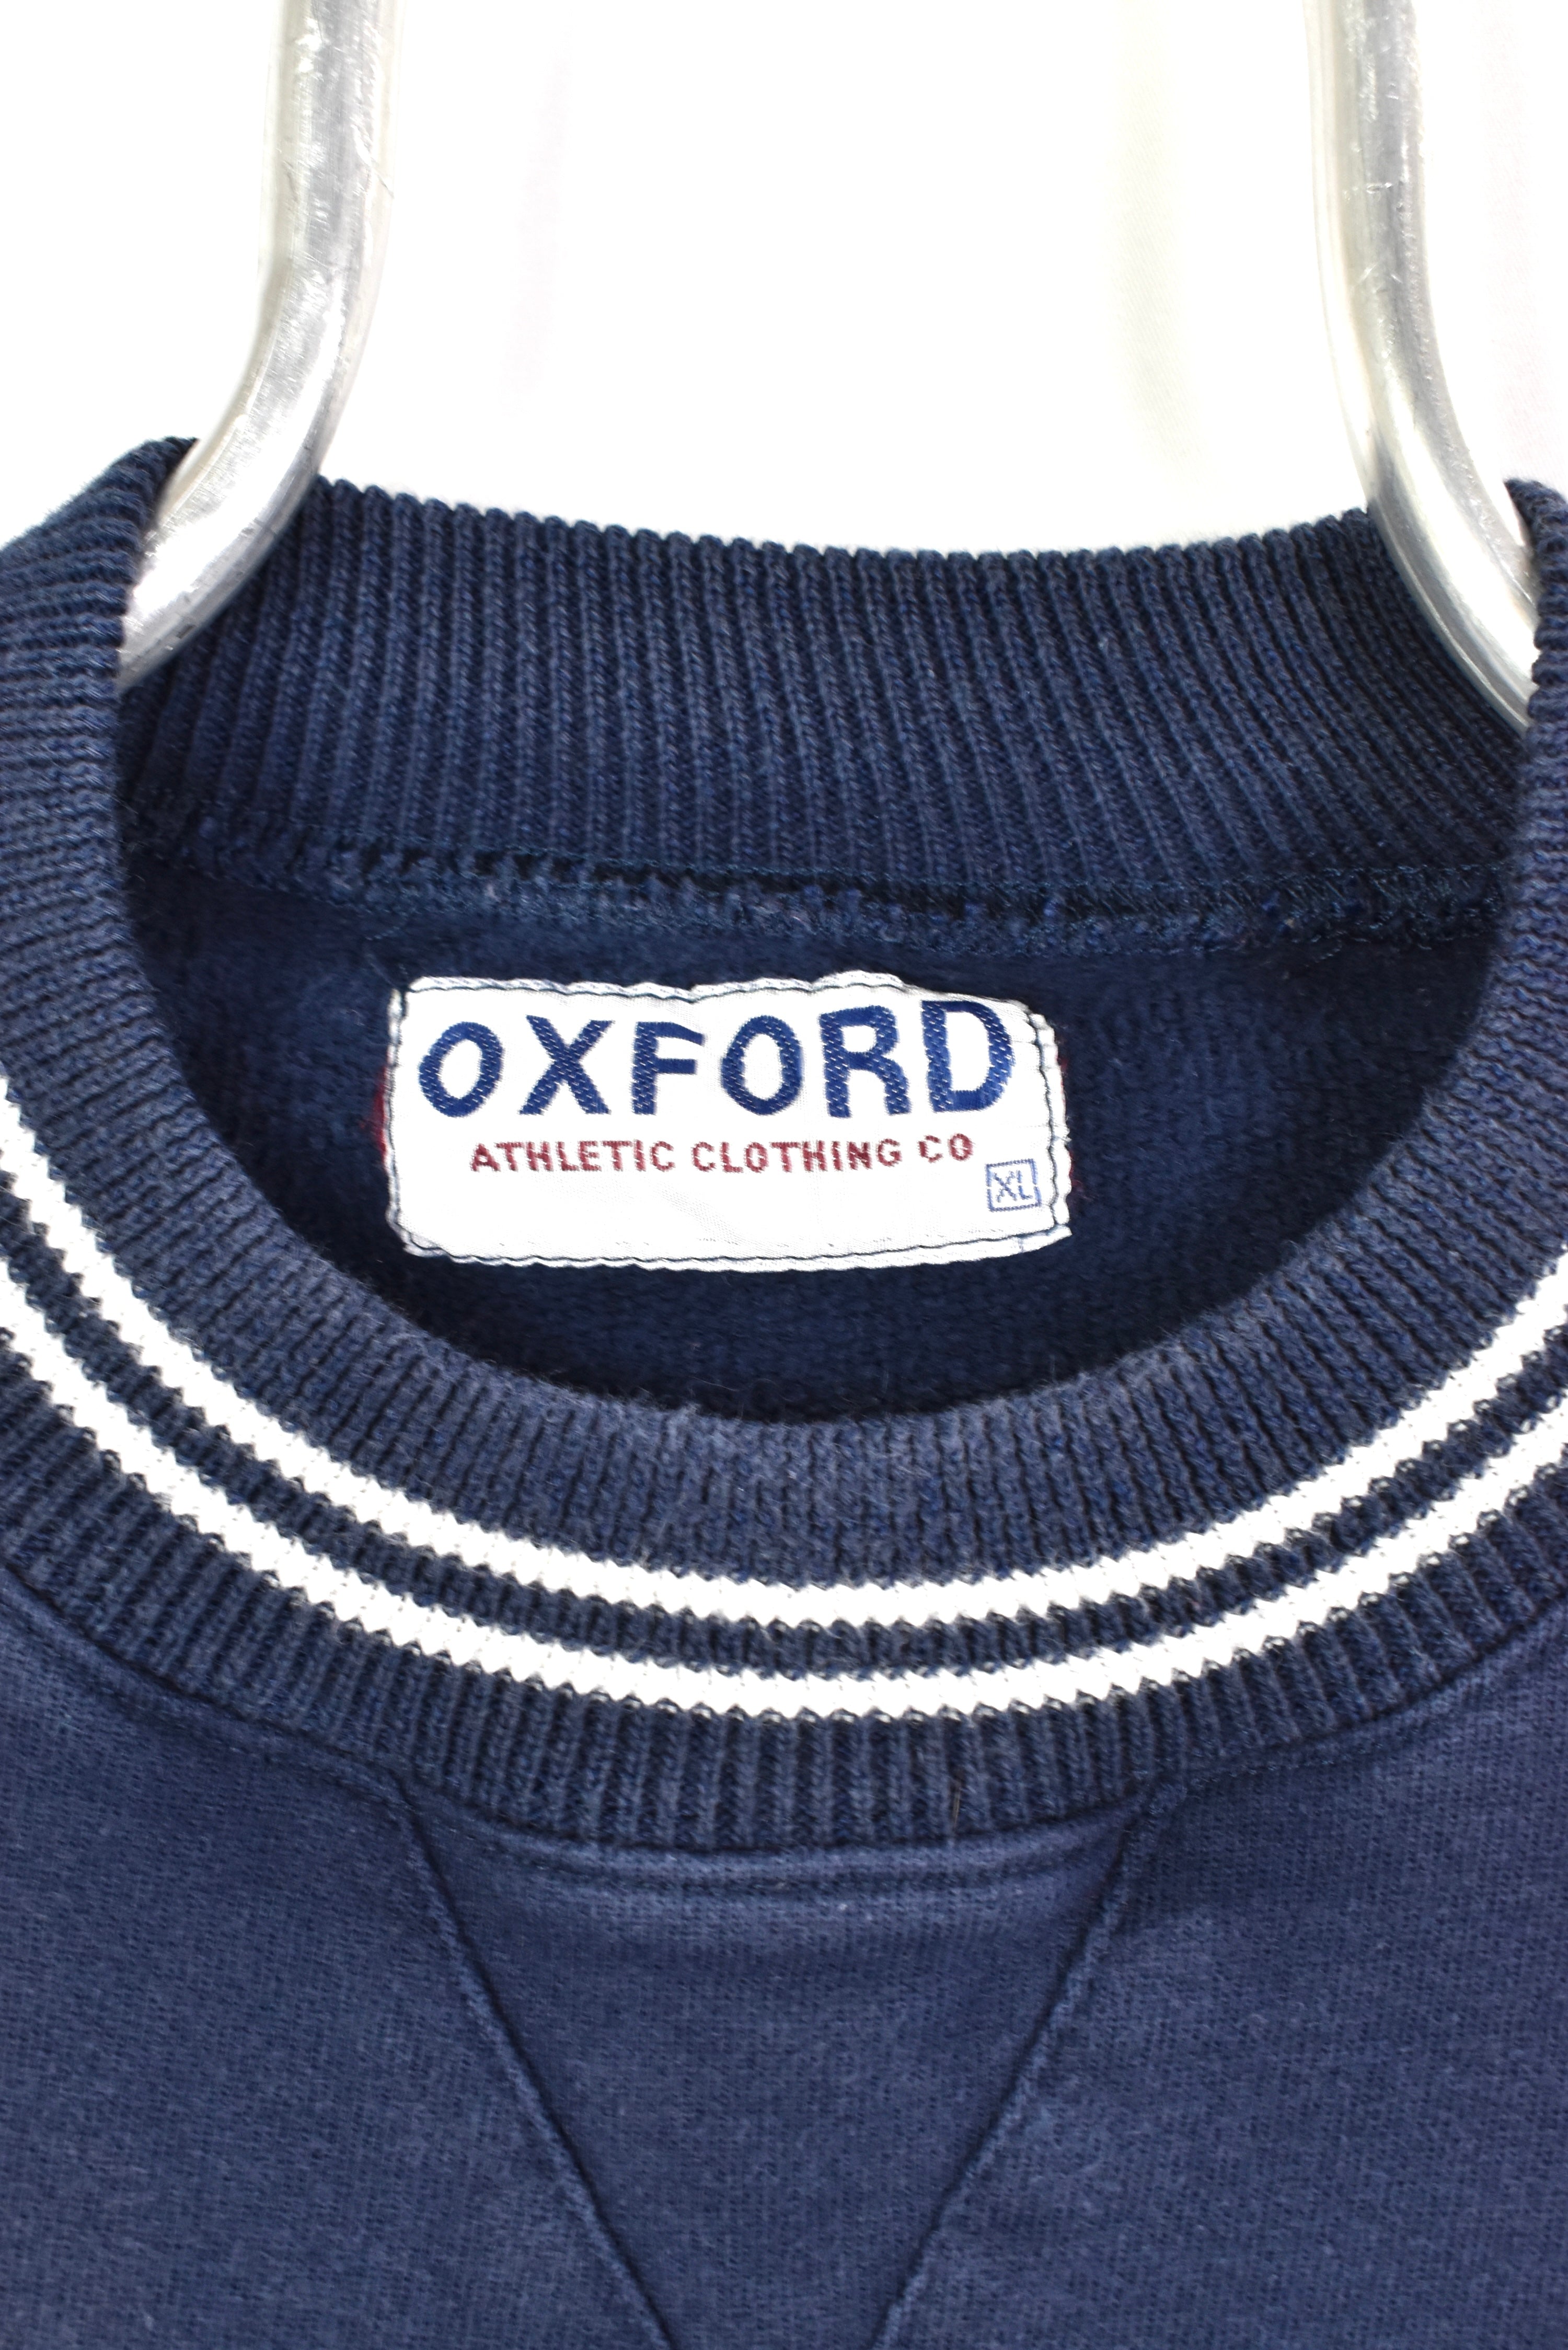 Vintage University of Oxford sweatshirt, college embroidered crewneck - XL, navy blue COLLEGE